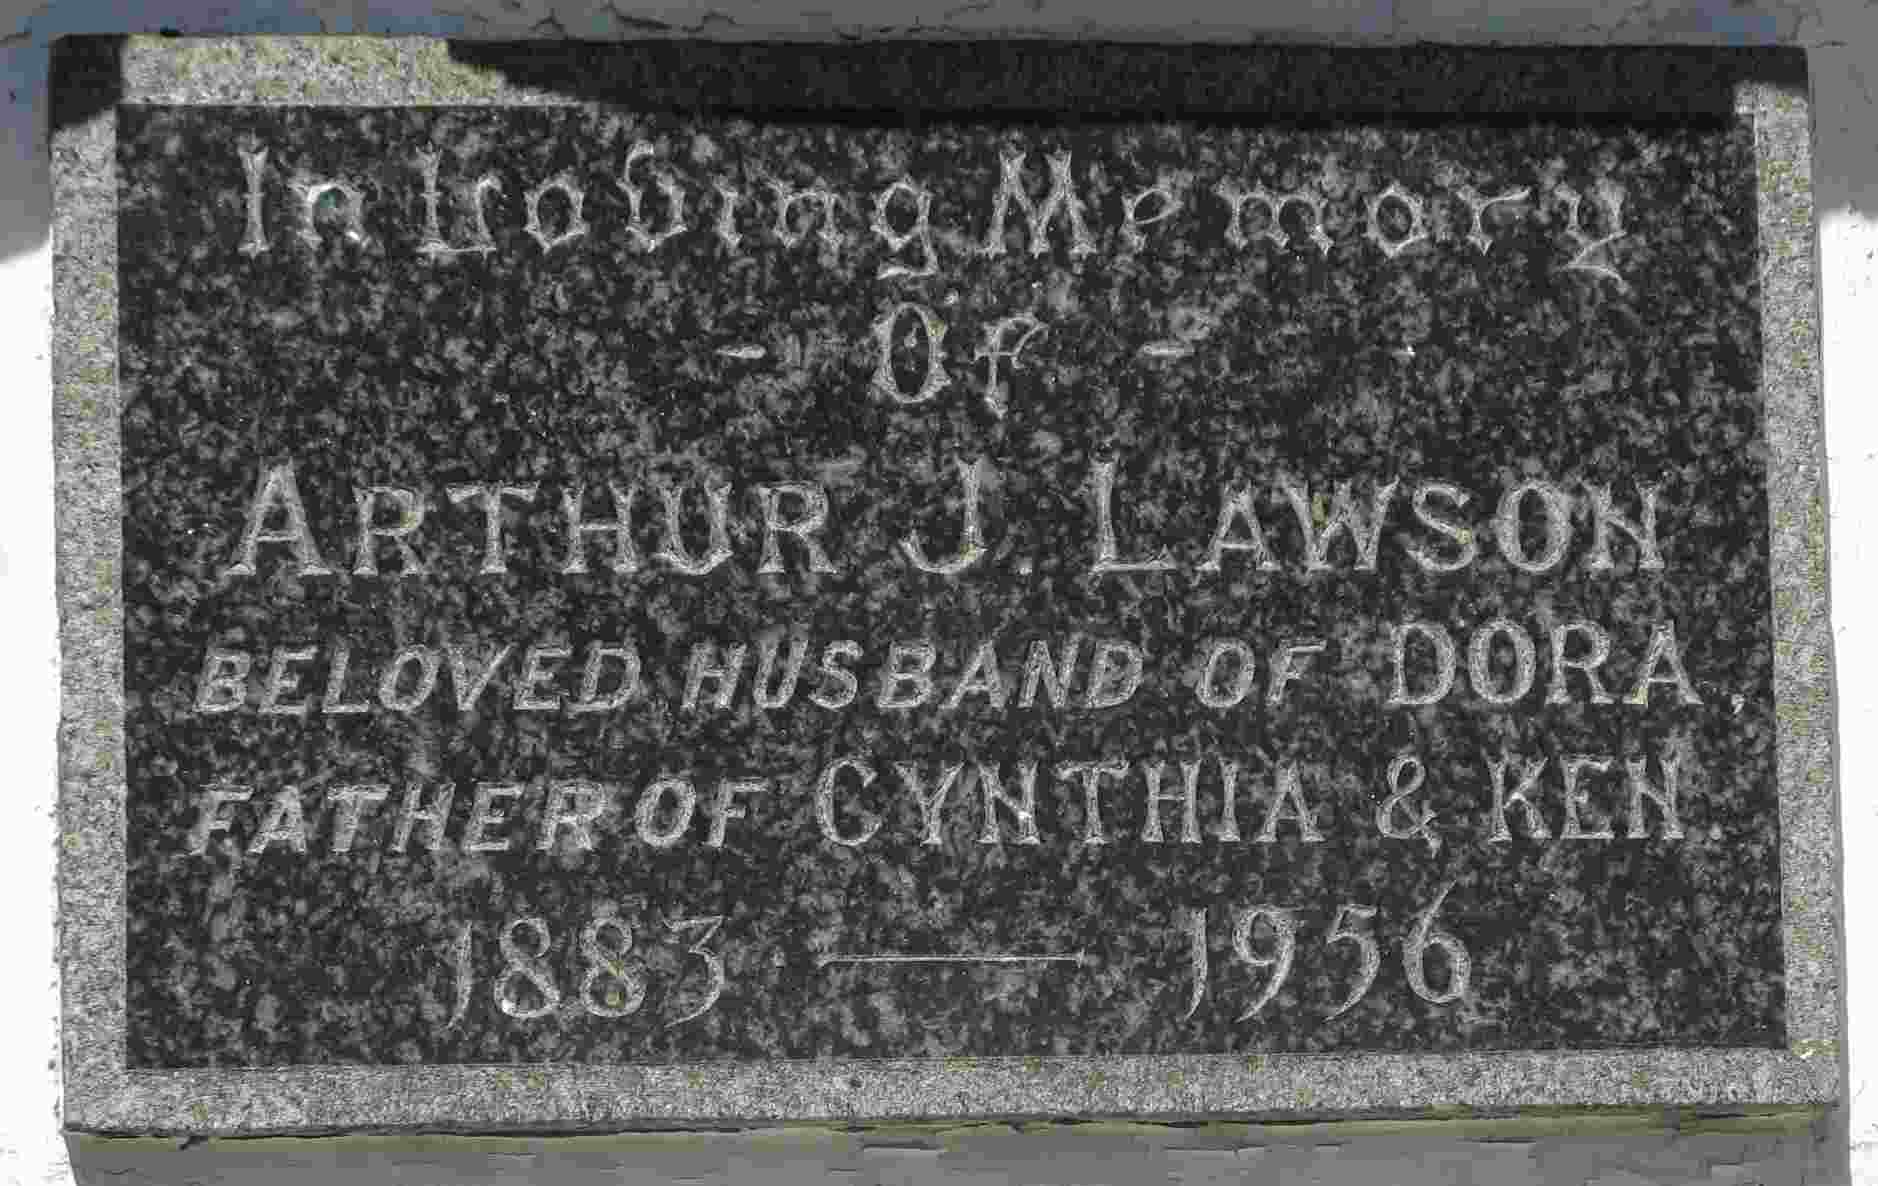 Memorial to Arthur John Lawson